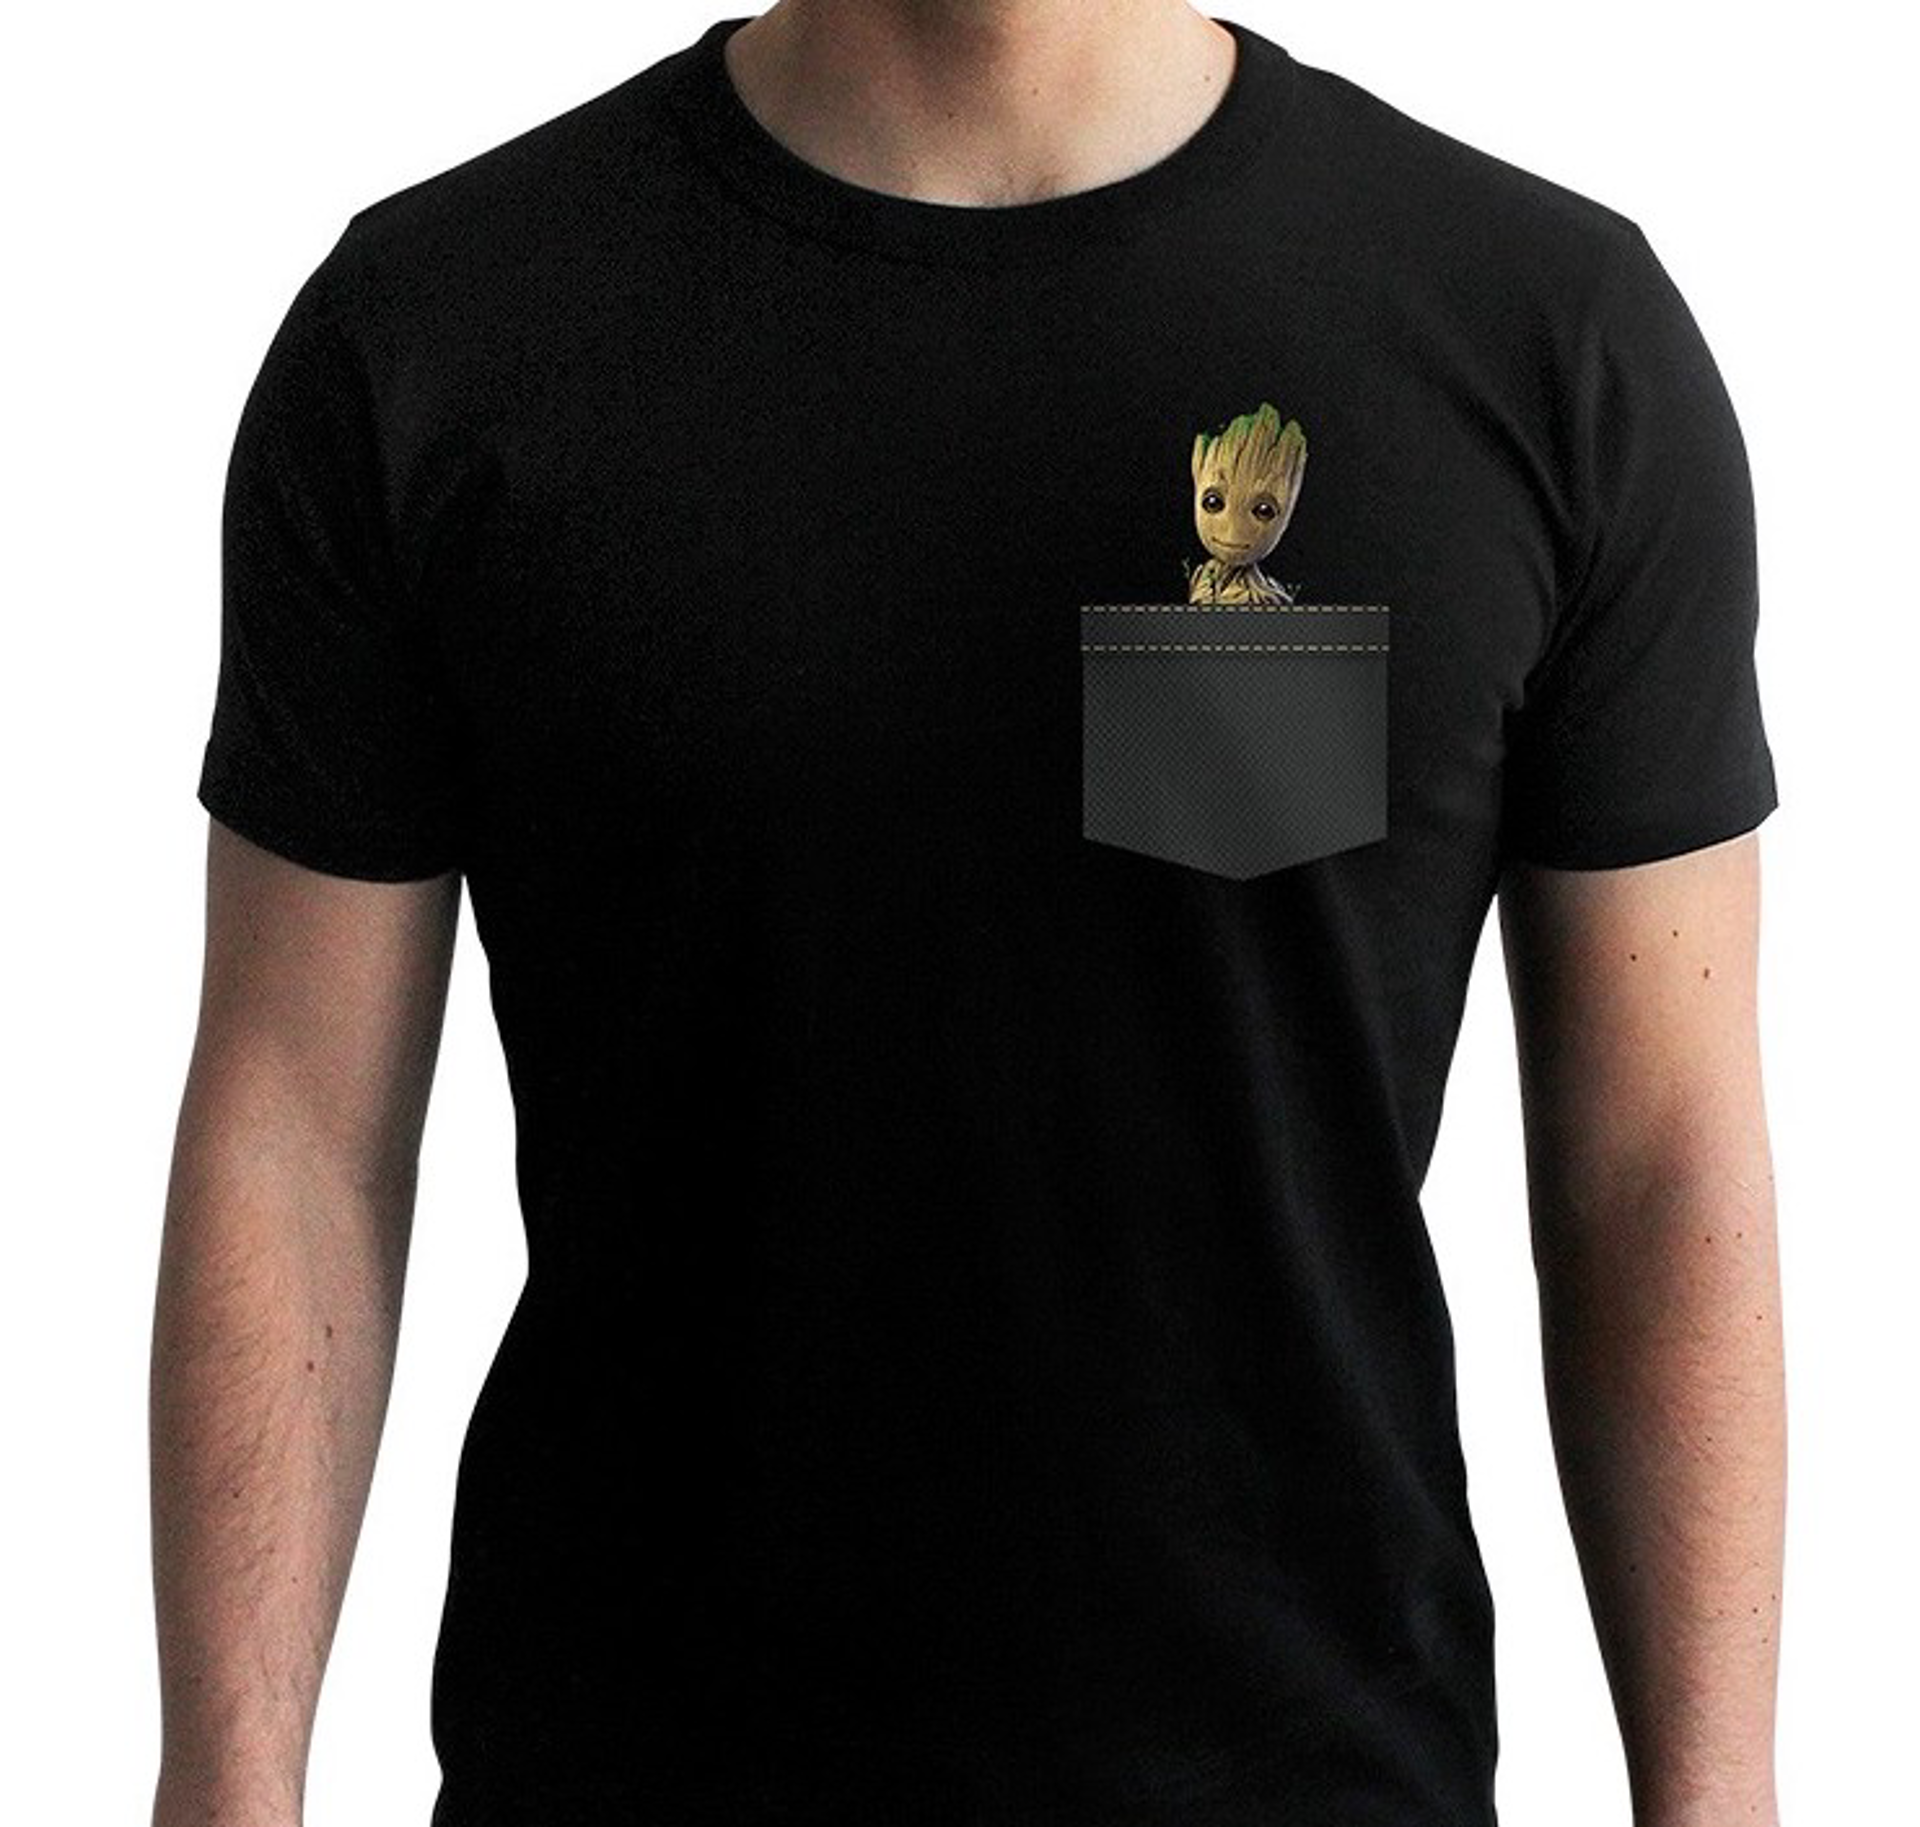 Marvel - Pocket Groot Black Man T-Shirt S